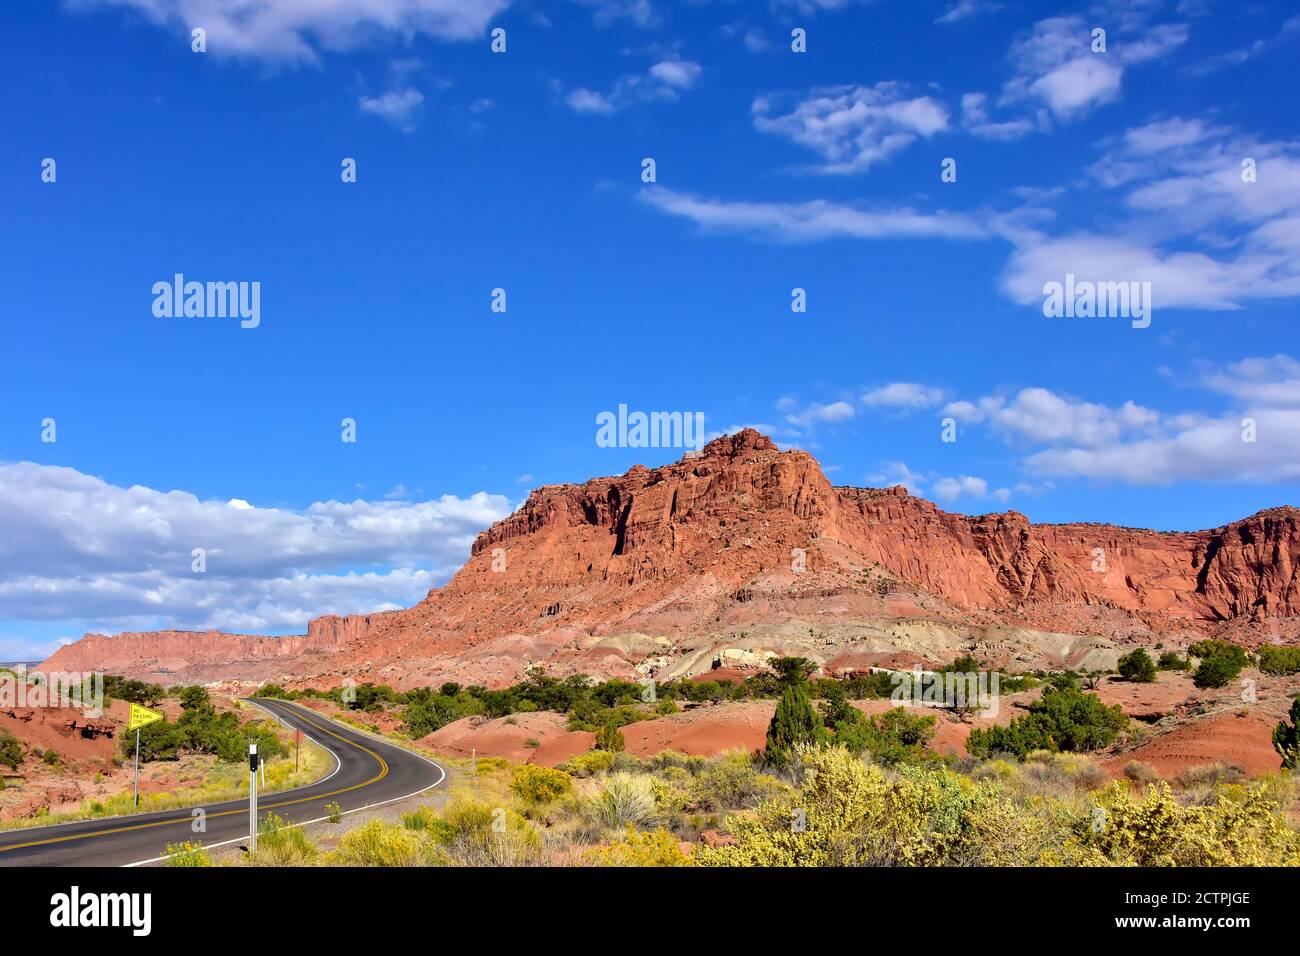 Carretera a través de las rocas rojas en el Parque Nacional Capitol Reef, Utah. Foto de stock